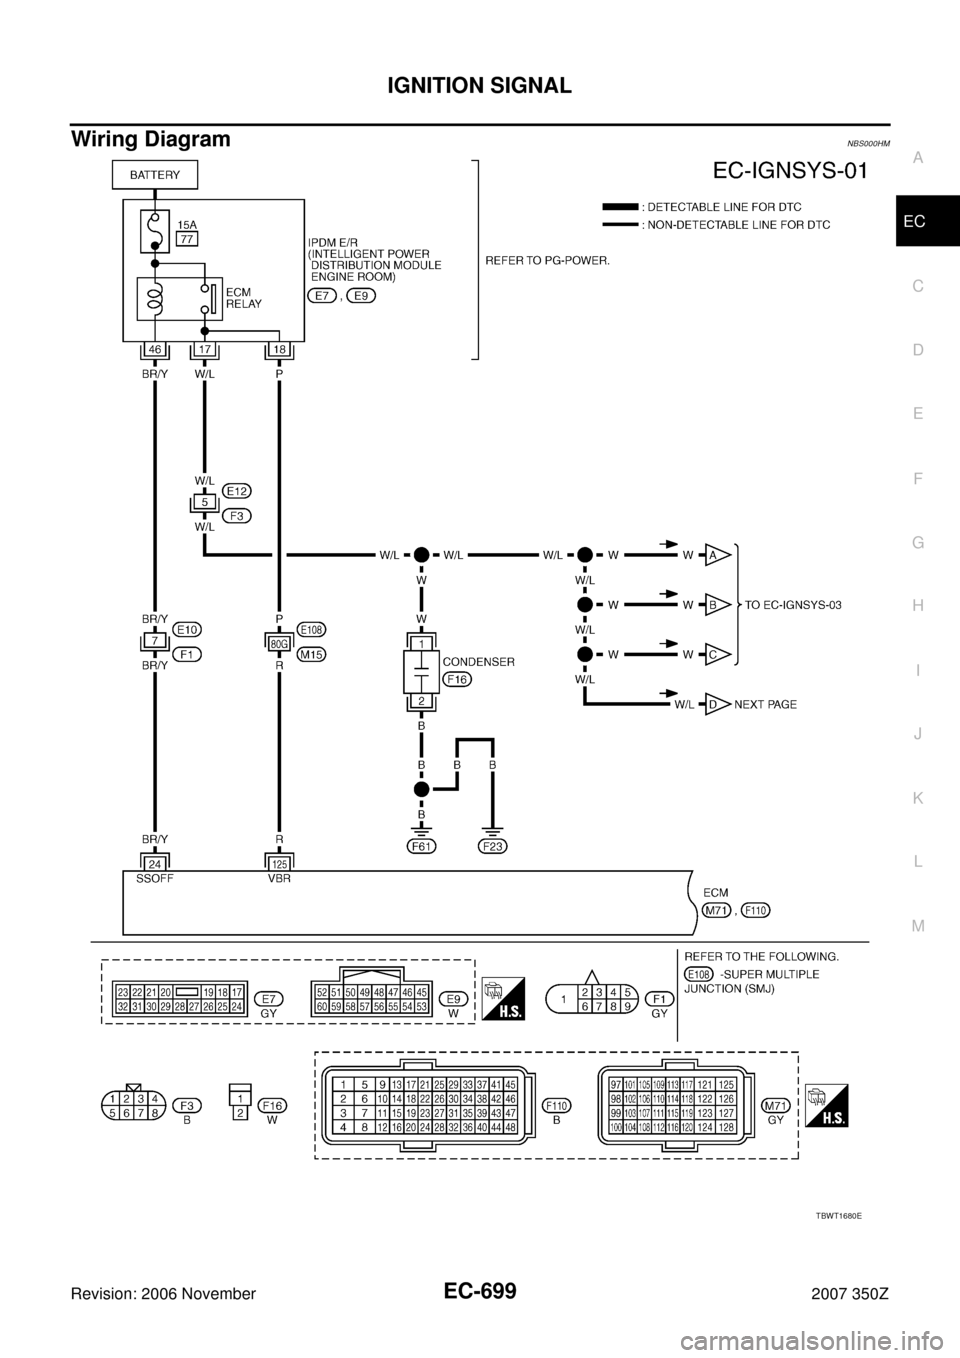 NISSAN 350Z 2007 Z33 Engine Control Workshop Manual IGNITION SIGNAL
EC-699
C
D
E
F
G
H
I
J
K
L
MA
EC
Revision: 2006 November2007 350Z
Wiring DiagramNBS000HM
TBWT1680E 